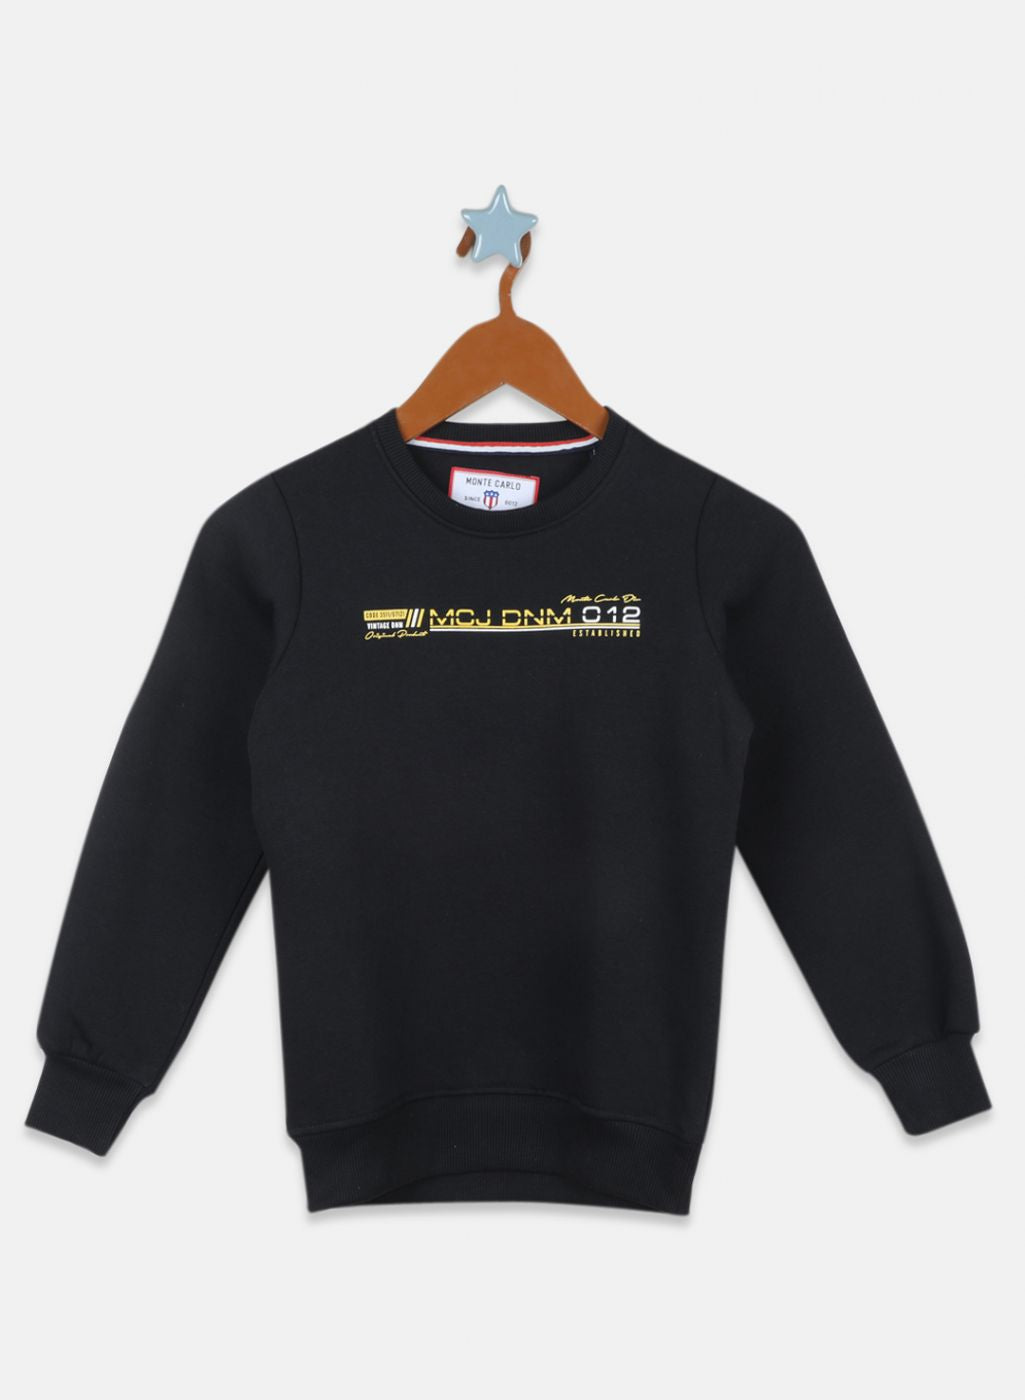 Boys Black Printed Sweatshirt